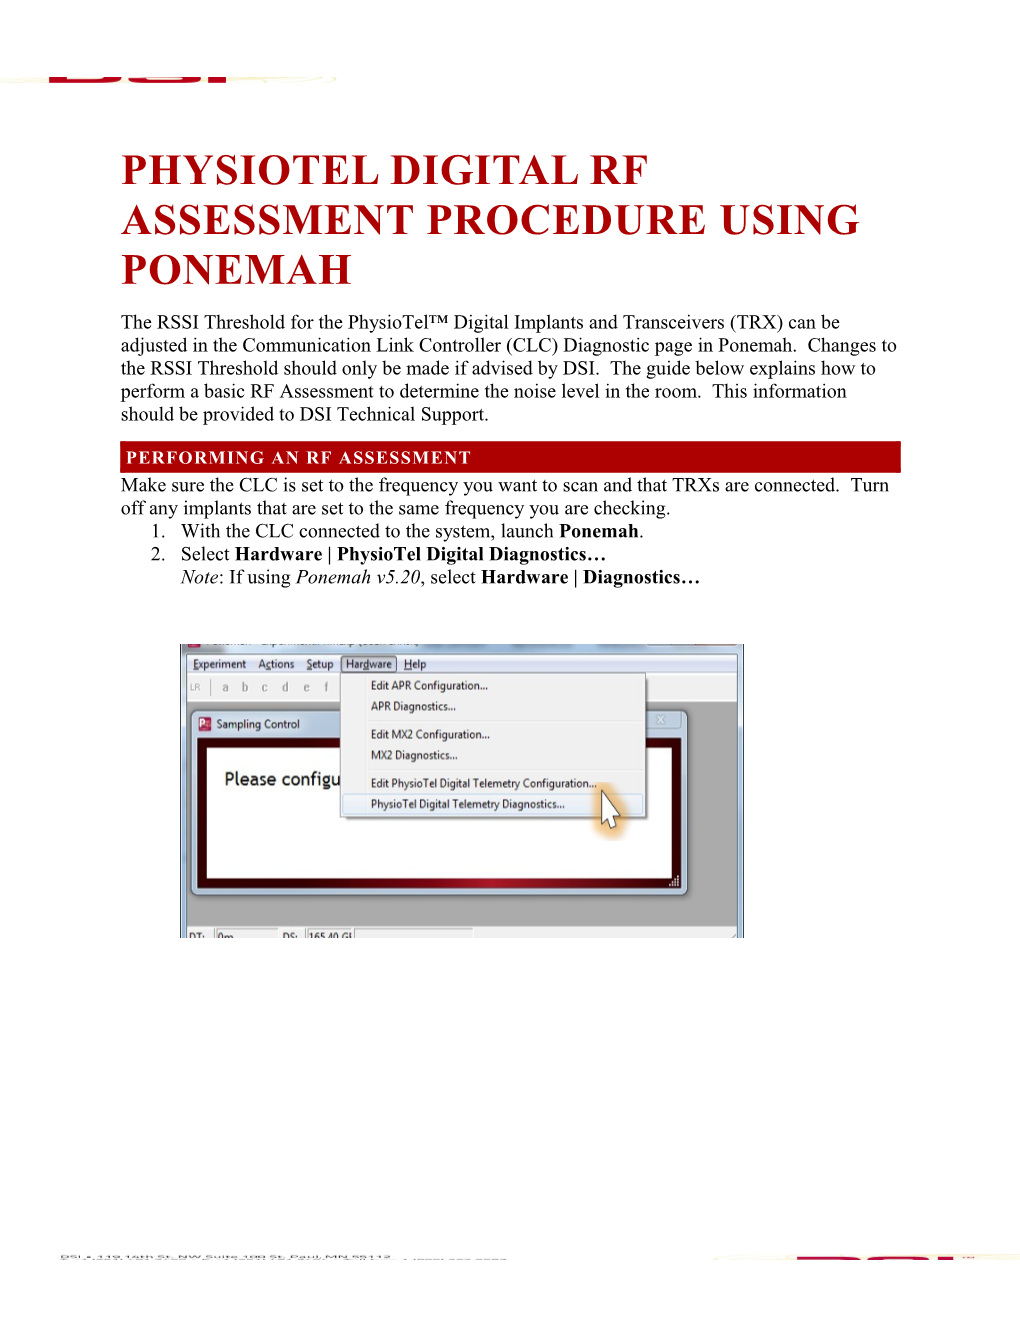 Technical Notepage 1 of 7Digital RF Assessment Procedure Rev. 01